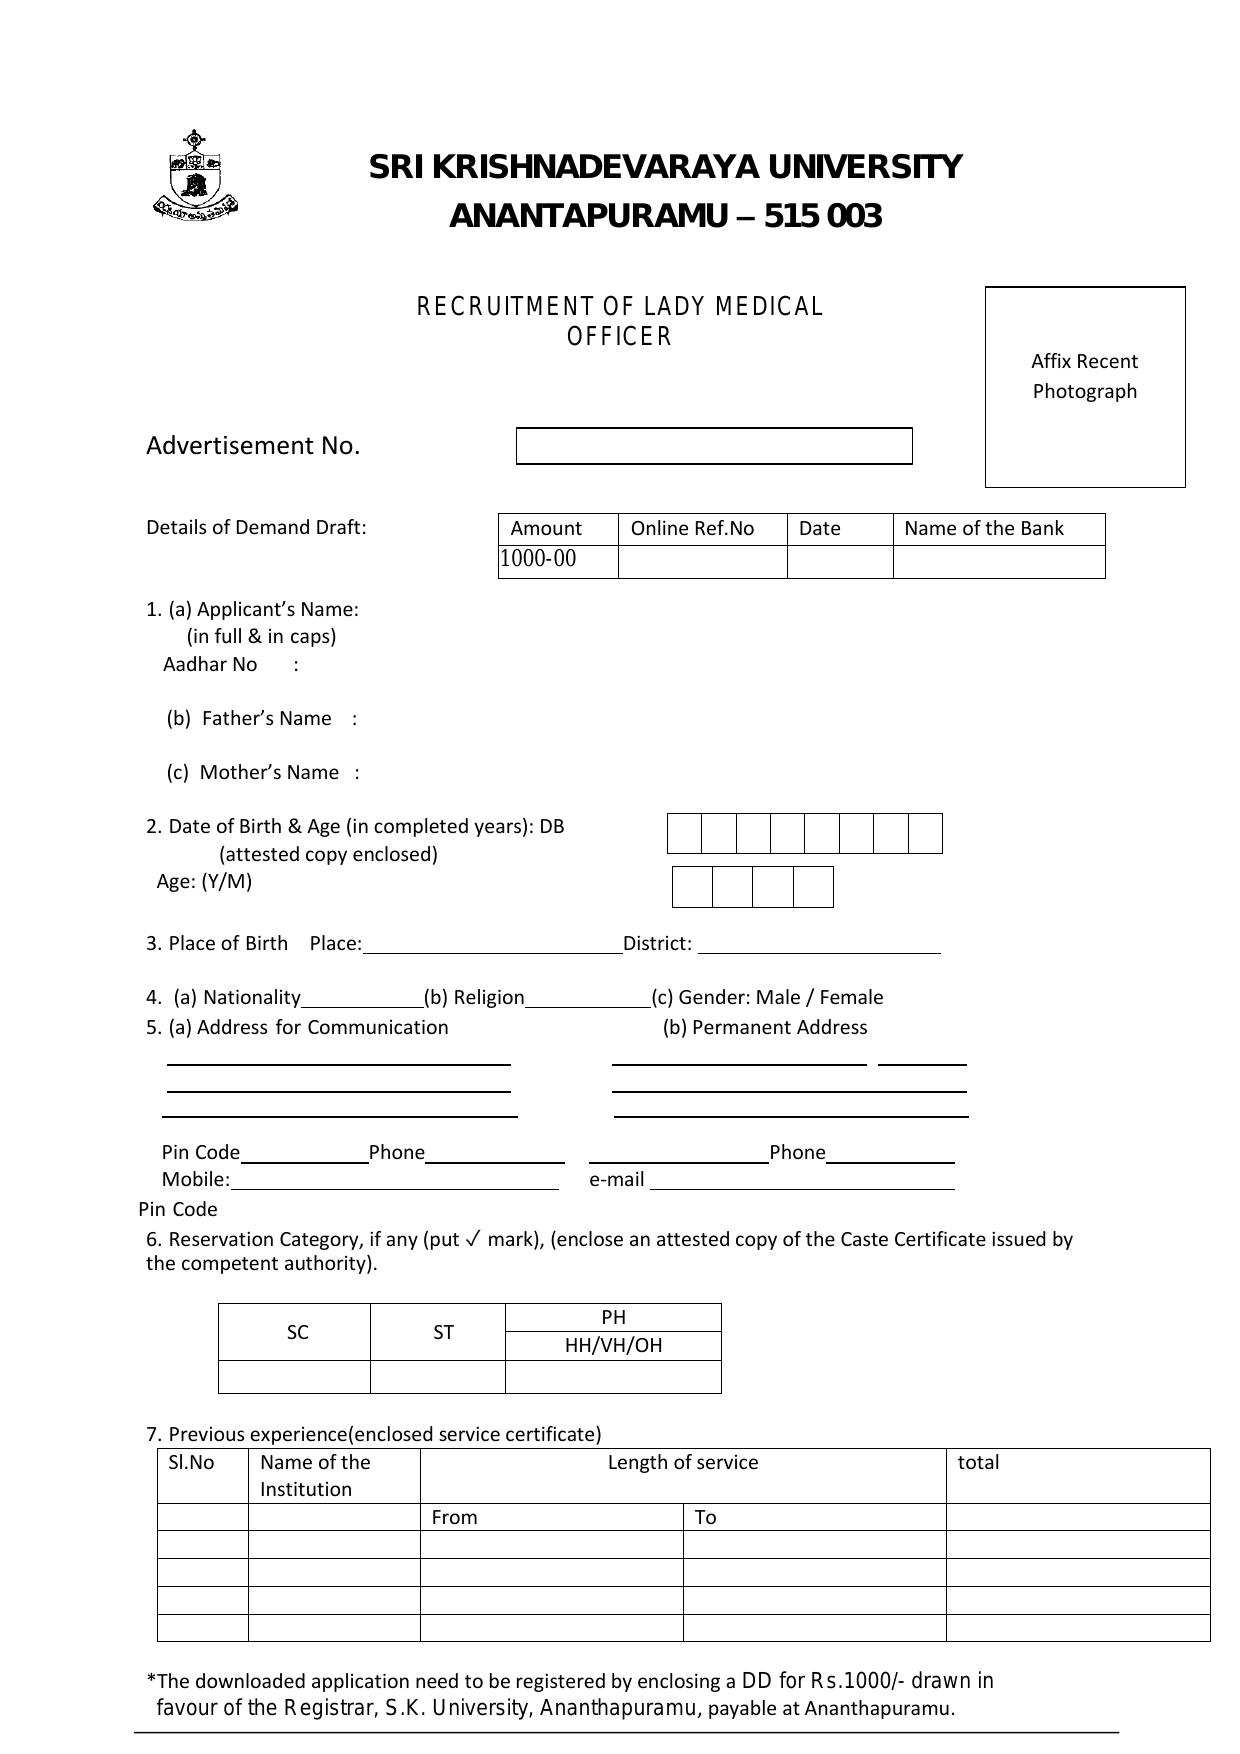 Sri Krishnadevaraya University Invites Application for Lady Medical Officer Recruitment 2023 - Page 2